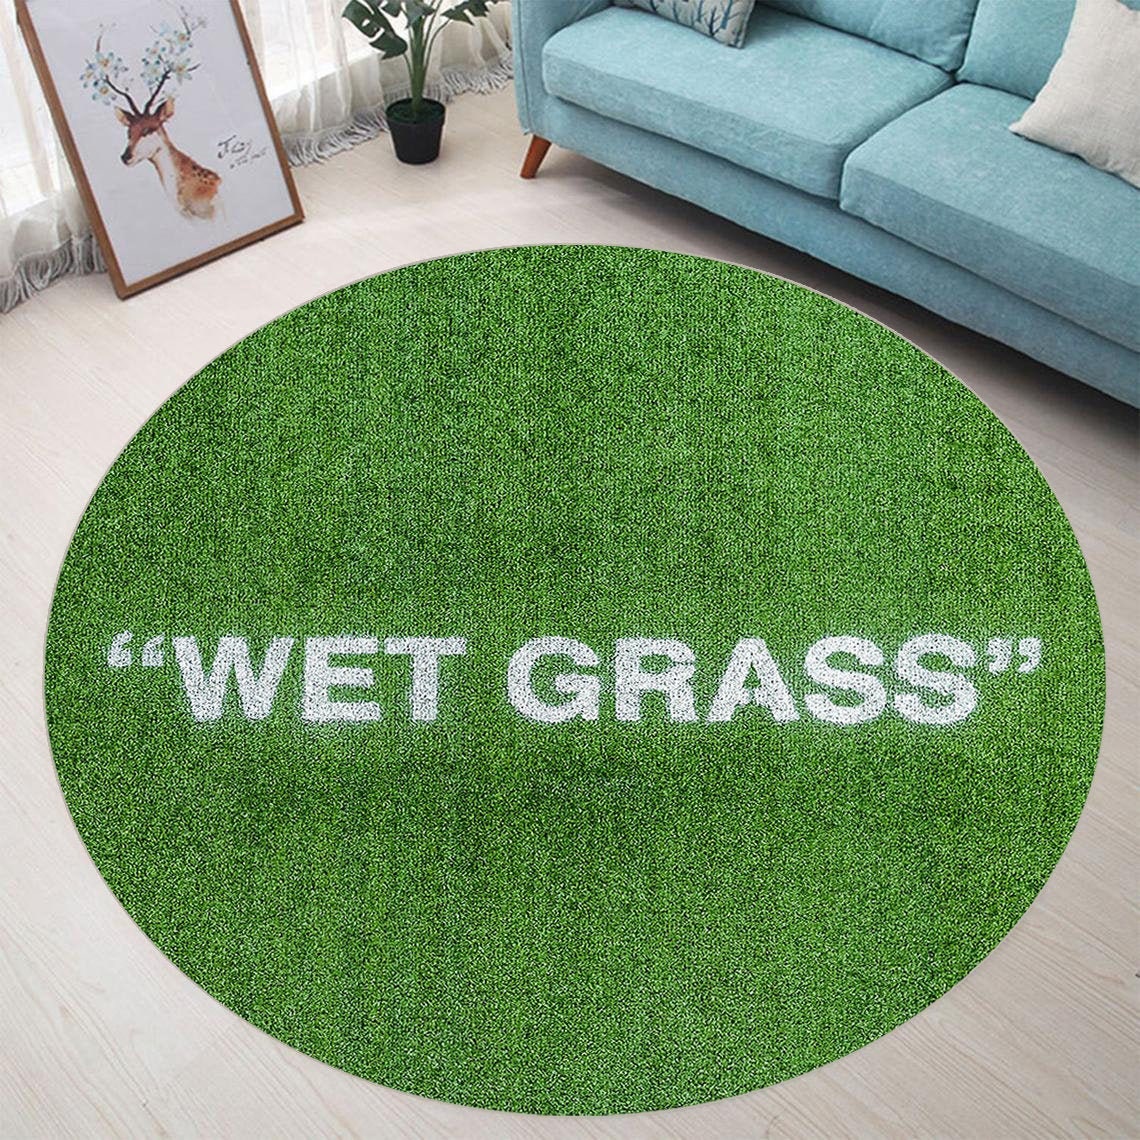 Wet Grass Rug, Hypebeast Rug, Decor Carpet, Boy Room Decor, Wet Grass, Gift  for Him, Home Decoration,popular Rug, Area Carpet, Modern Rug 